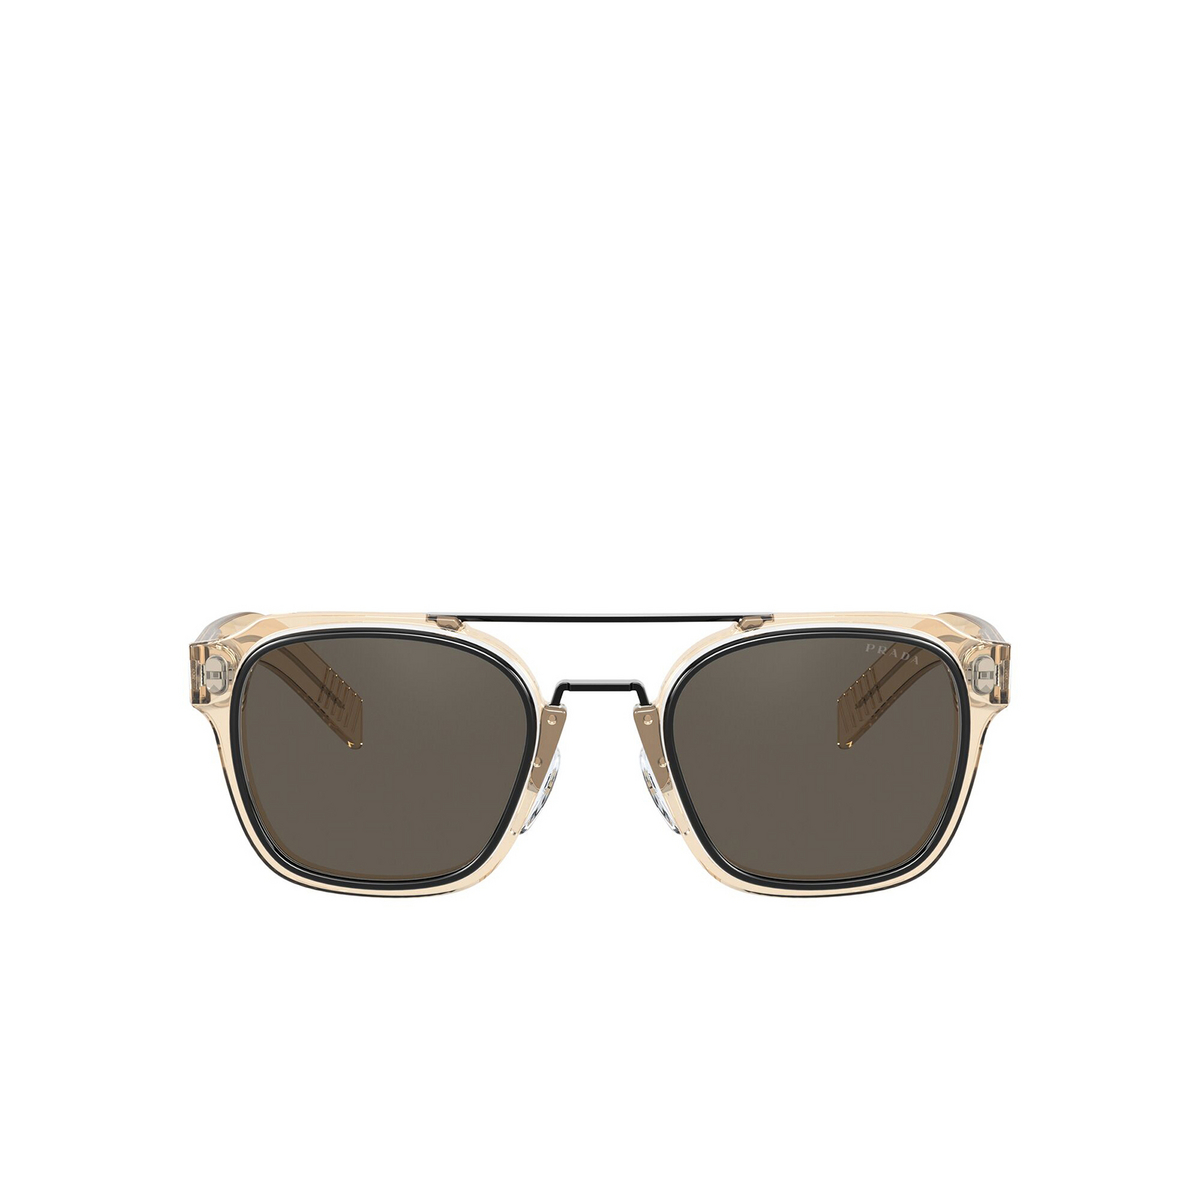 Prada® Square Sunglasses: PR 07WS color Black / White / Amber Crystal 05L5G1 - front view.